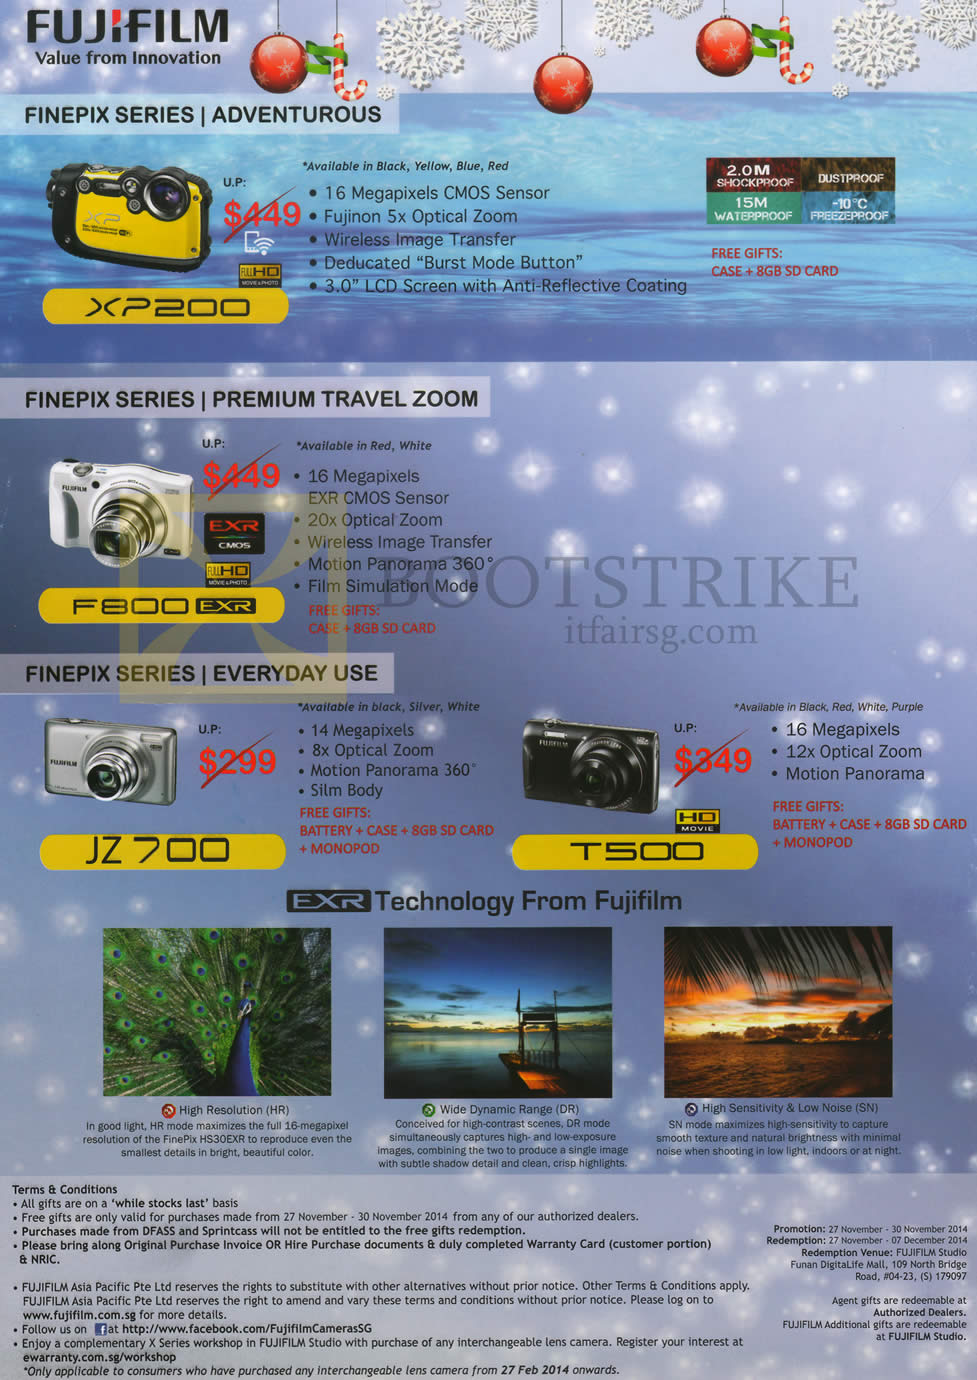 SITEX 2014 price list image brochure of Fujifilm Digital Cameras (No Prices) XP200, F800, JZ700, T500